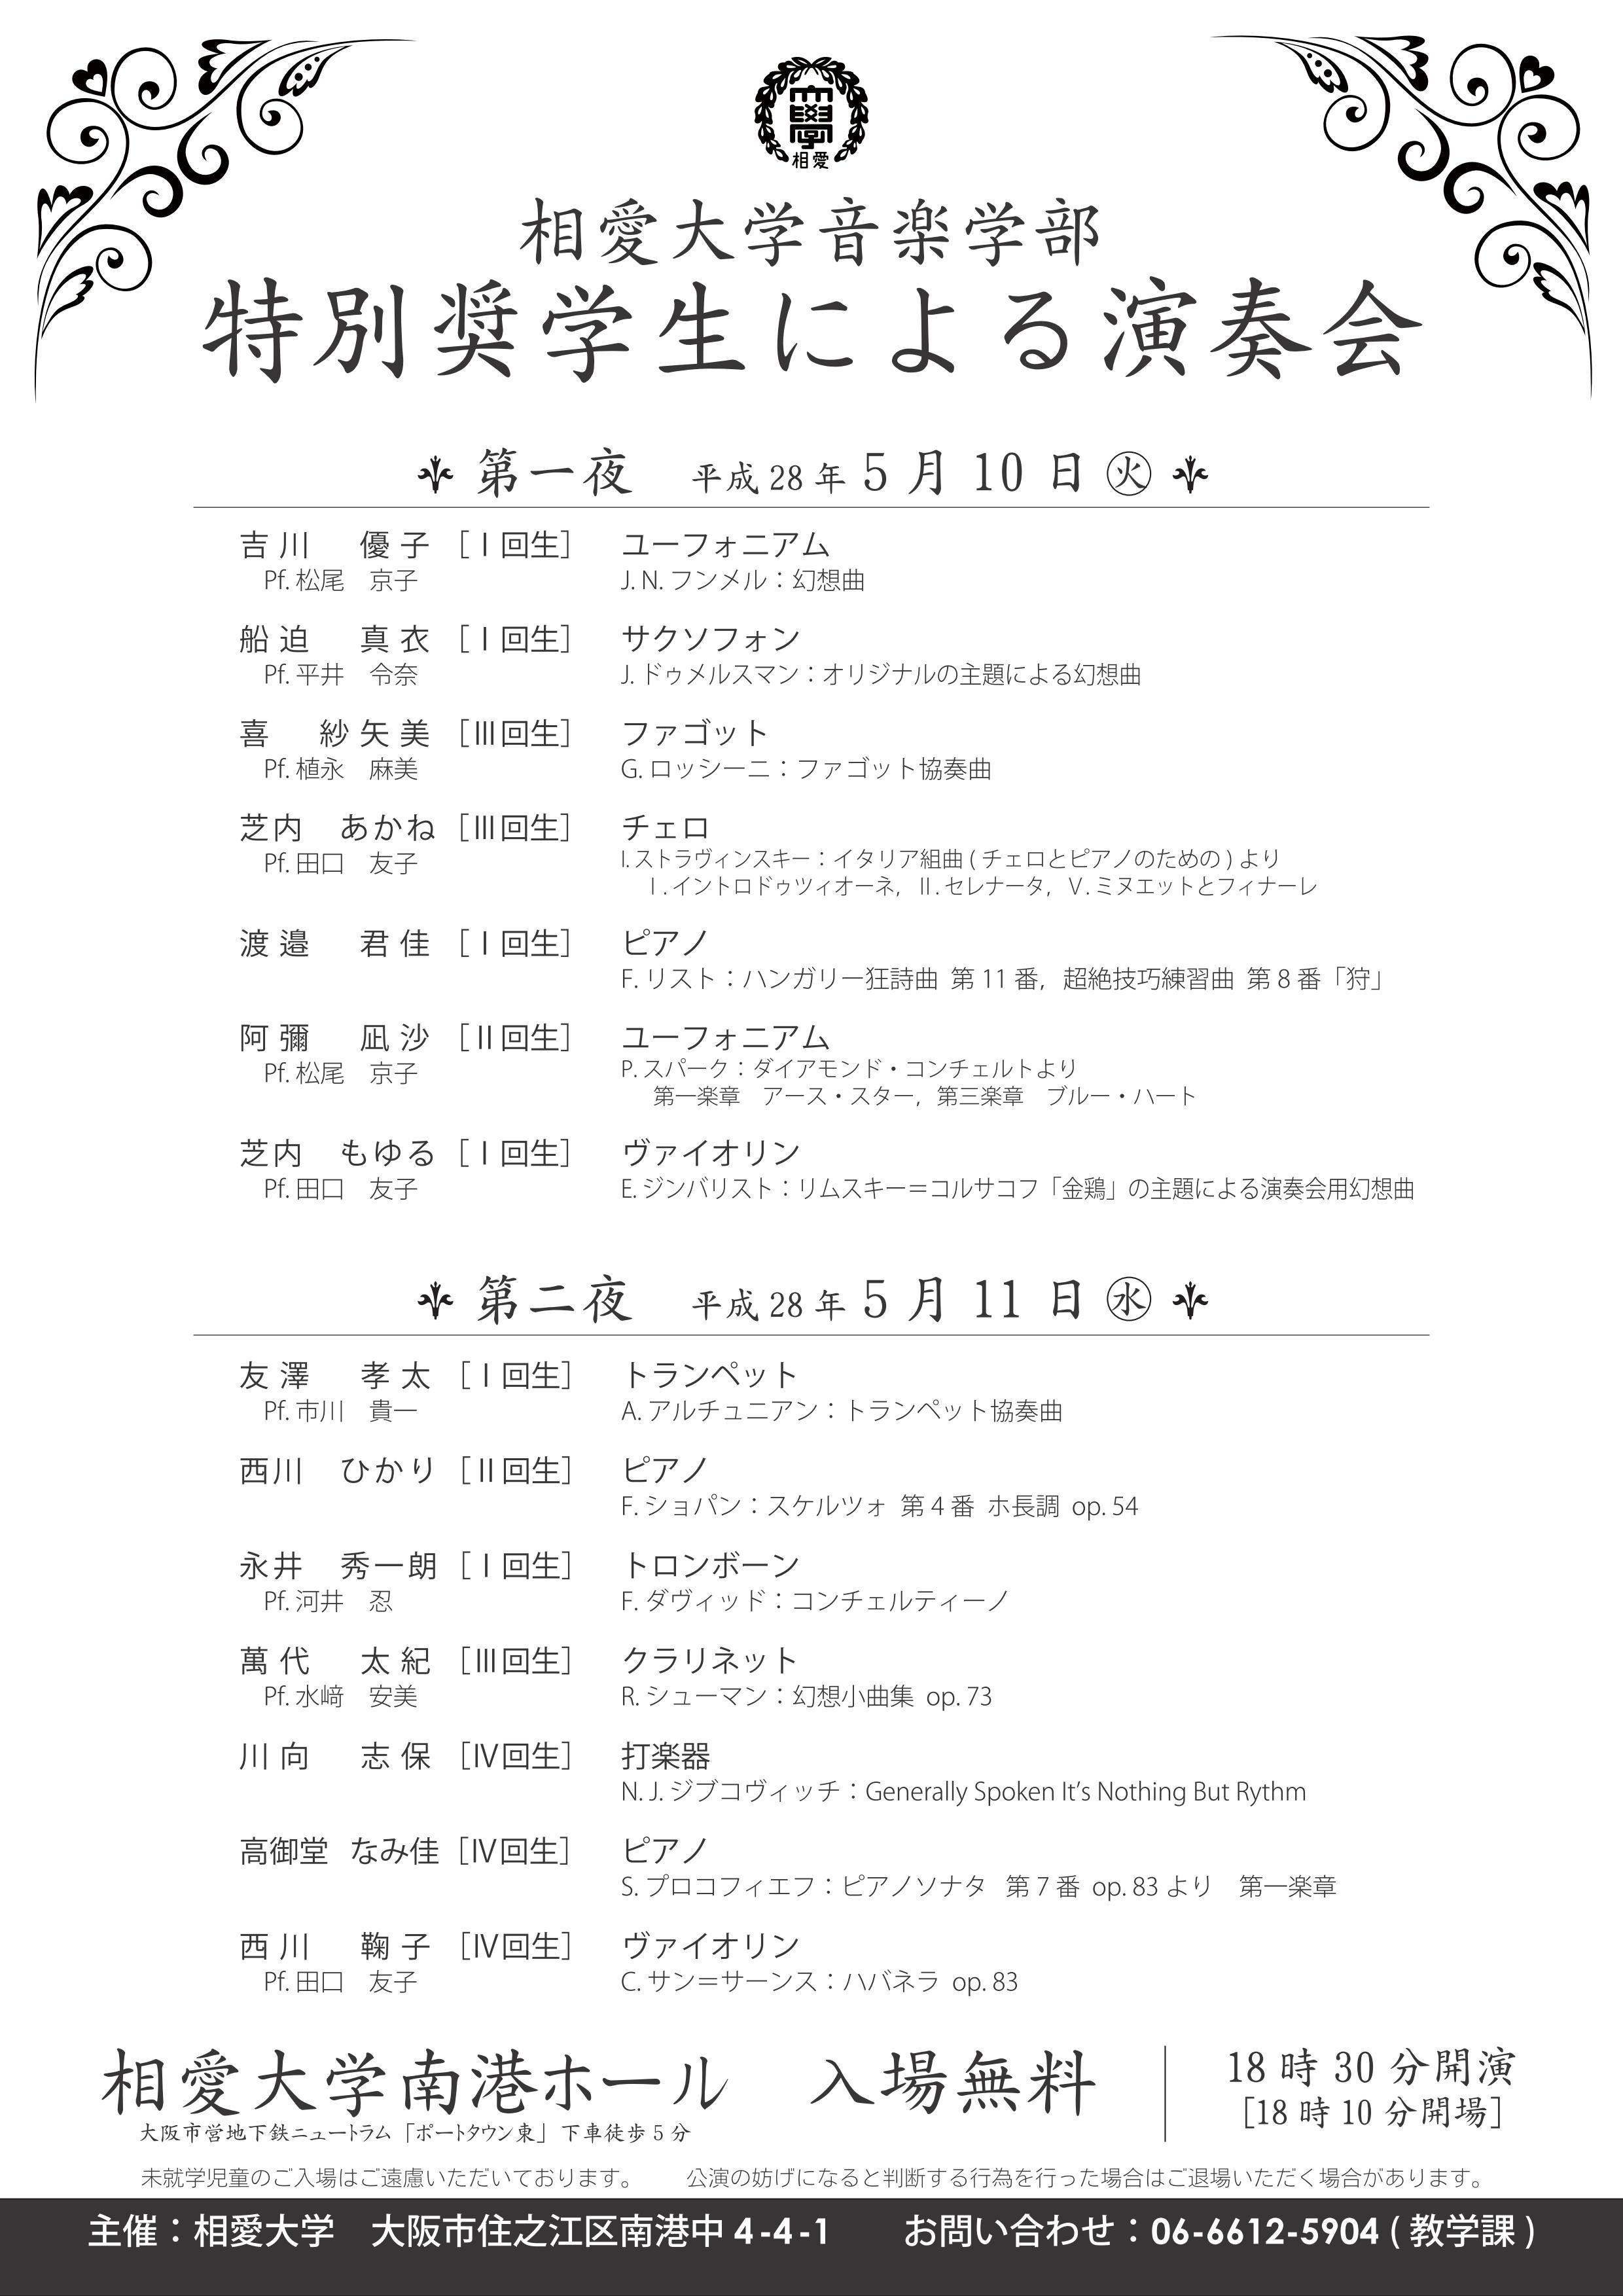 http://www.soai.ac.jp/information/concert/20160510_tokubetsu-shougaku.jpg